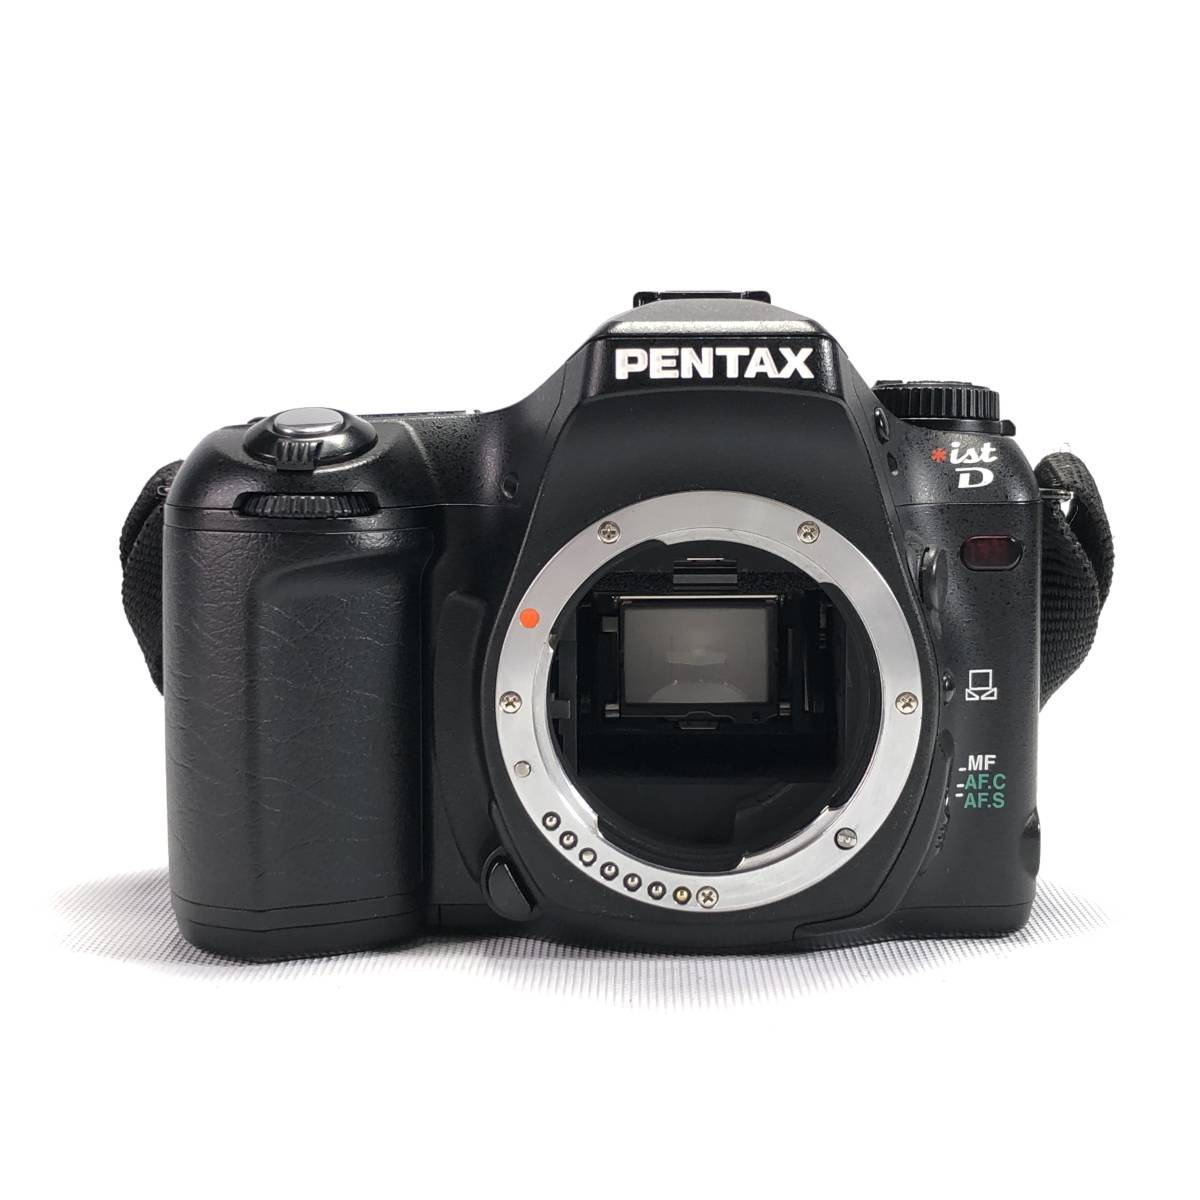 PENTAX *ist D + smc PENTAX-DA 18-55mm F3.5-5.6 AL ペンタックス デジタル 一眼レフ カメラ 並品 ヱOA4c_画像2